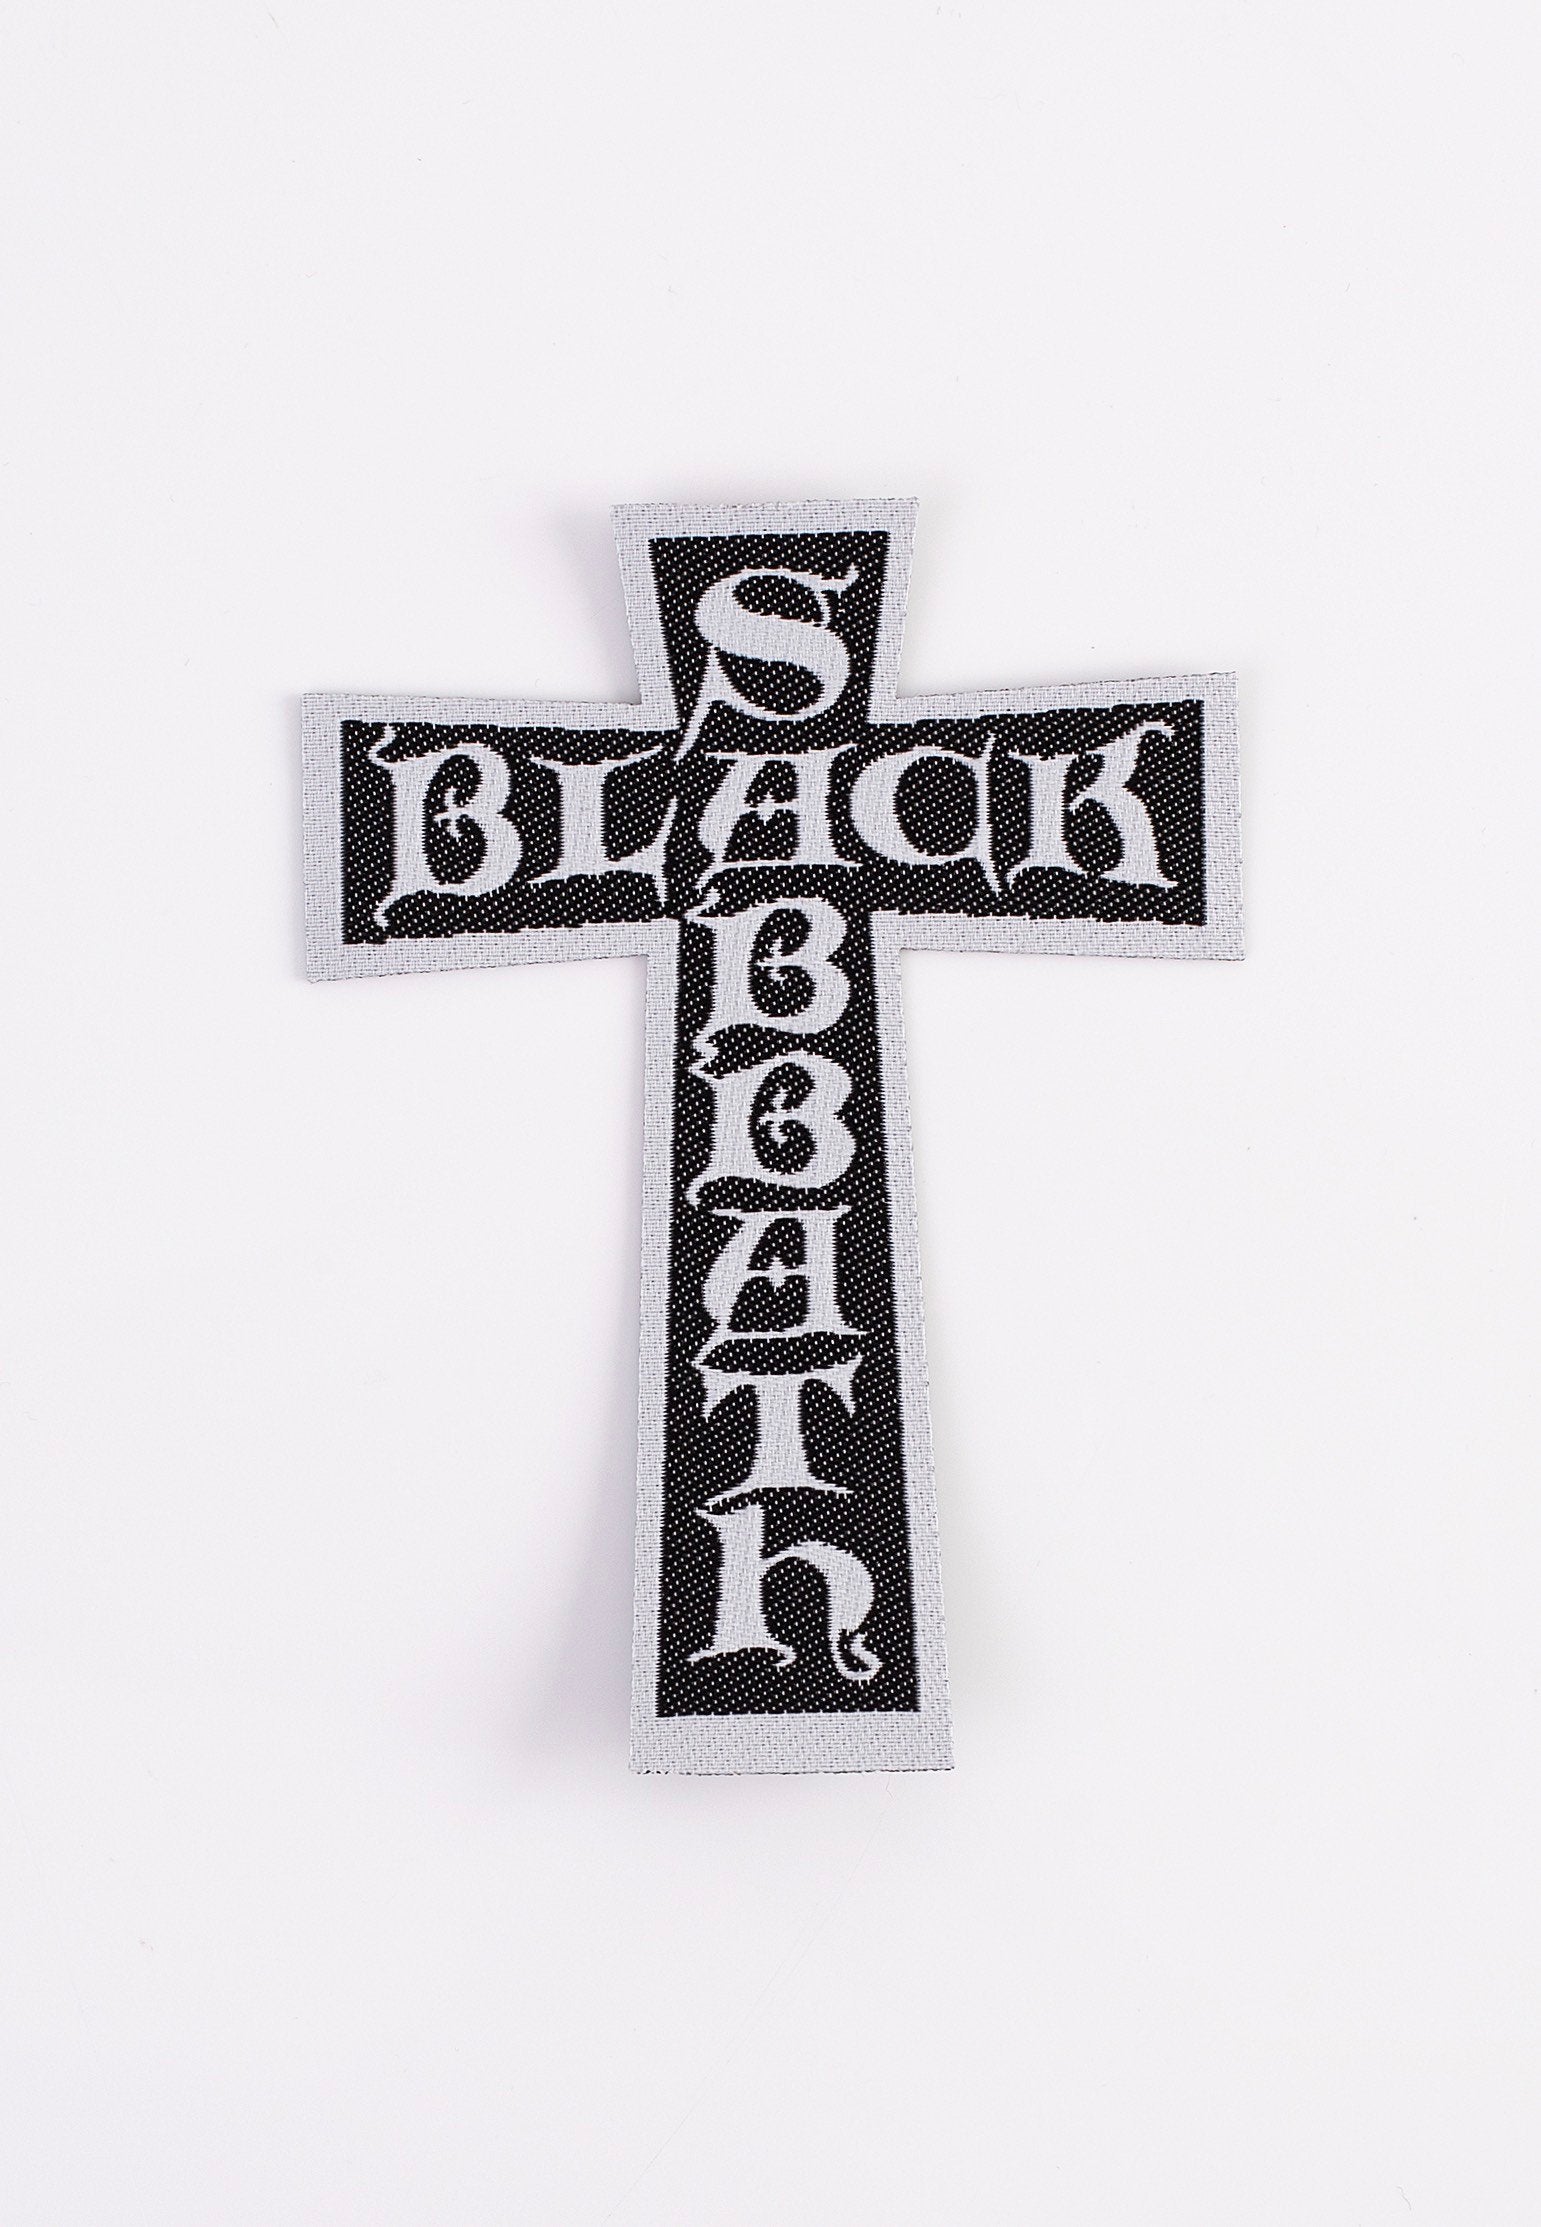 Black Sabbath - Cross Logo Cut Out - Patch